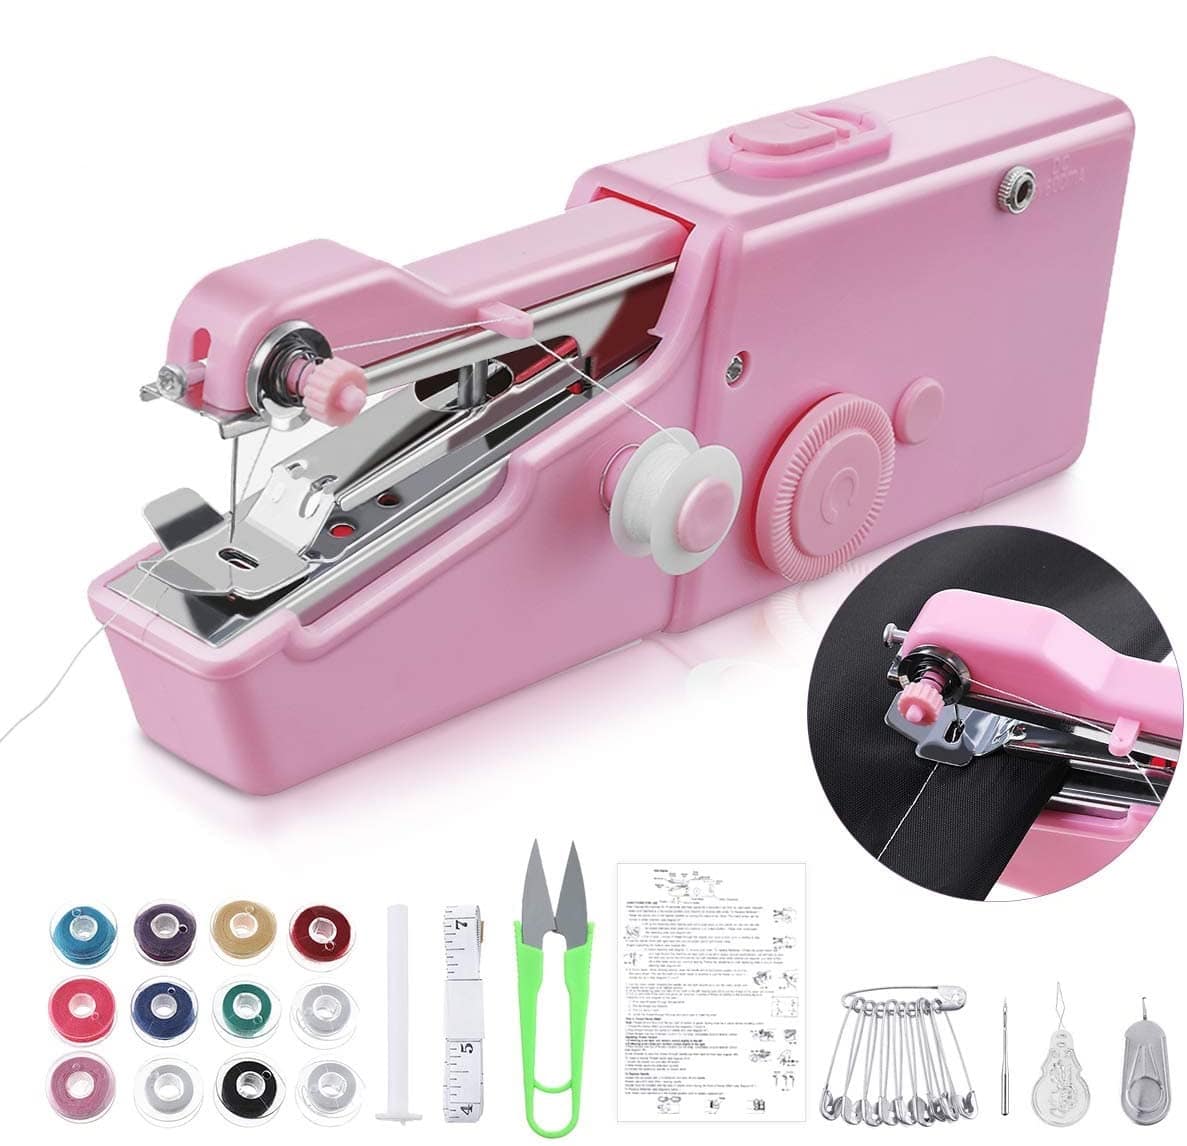 Jeteven Handheld Sewing Machine 